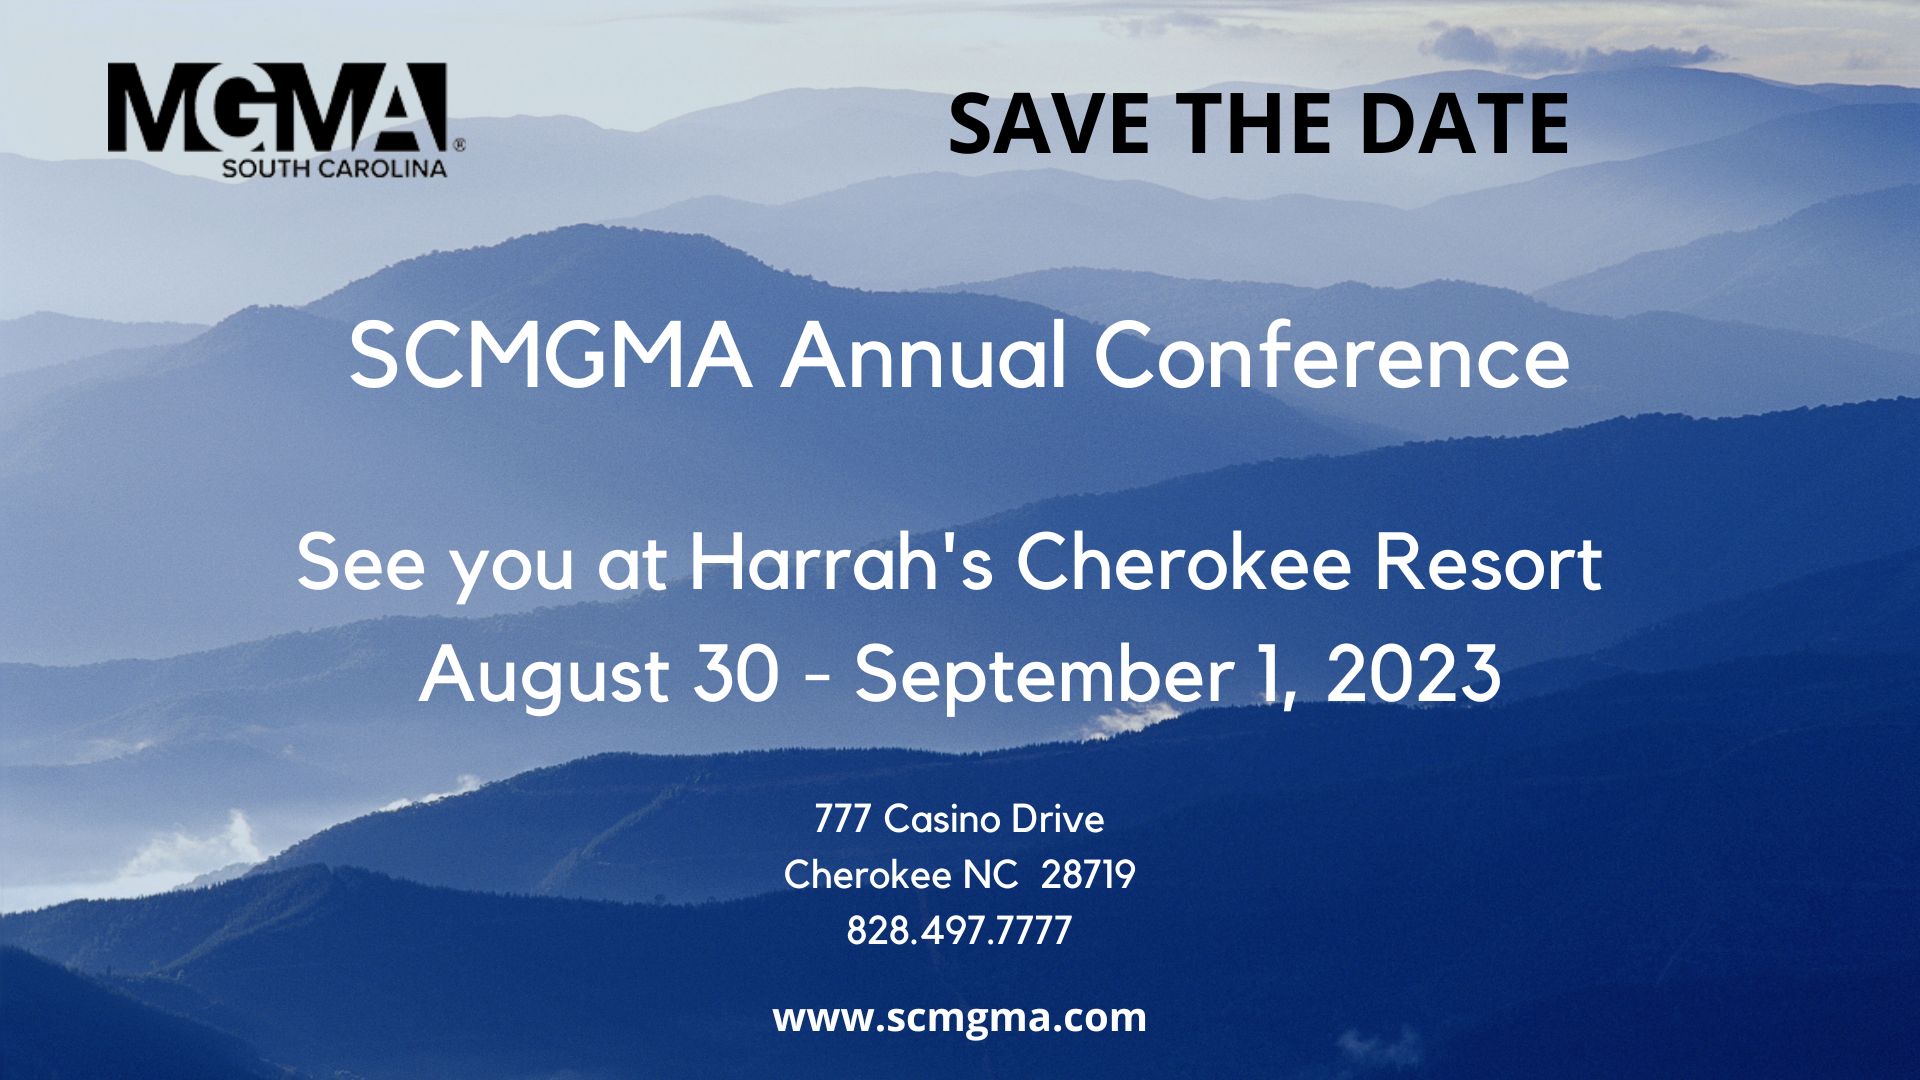 STD 2023 SCMGMA Conference